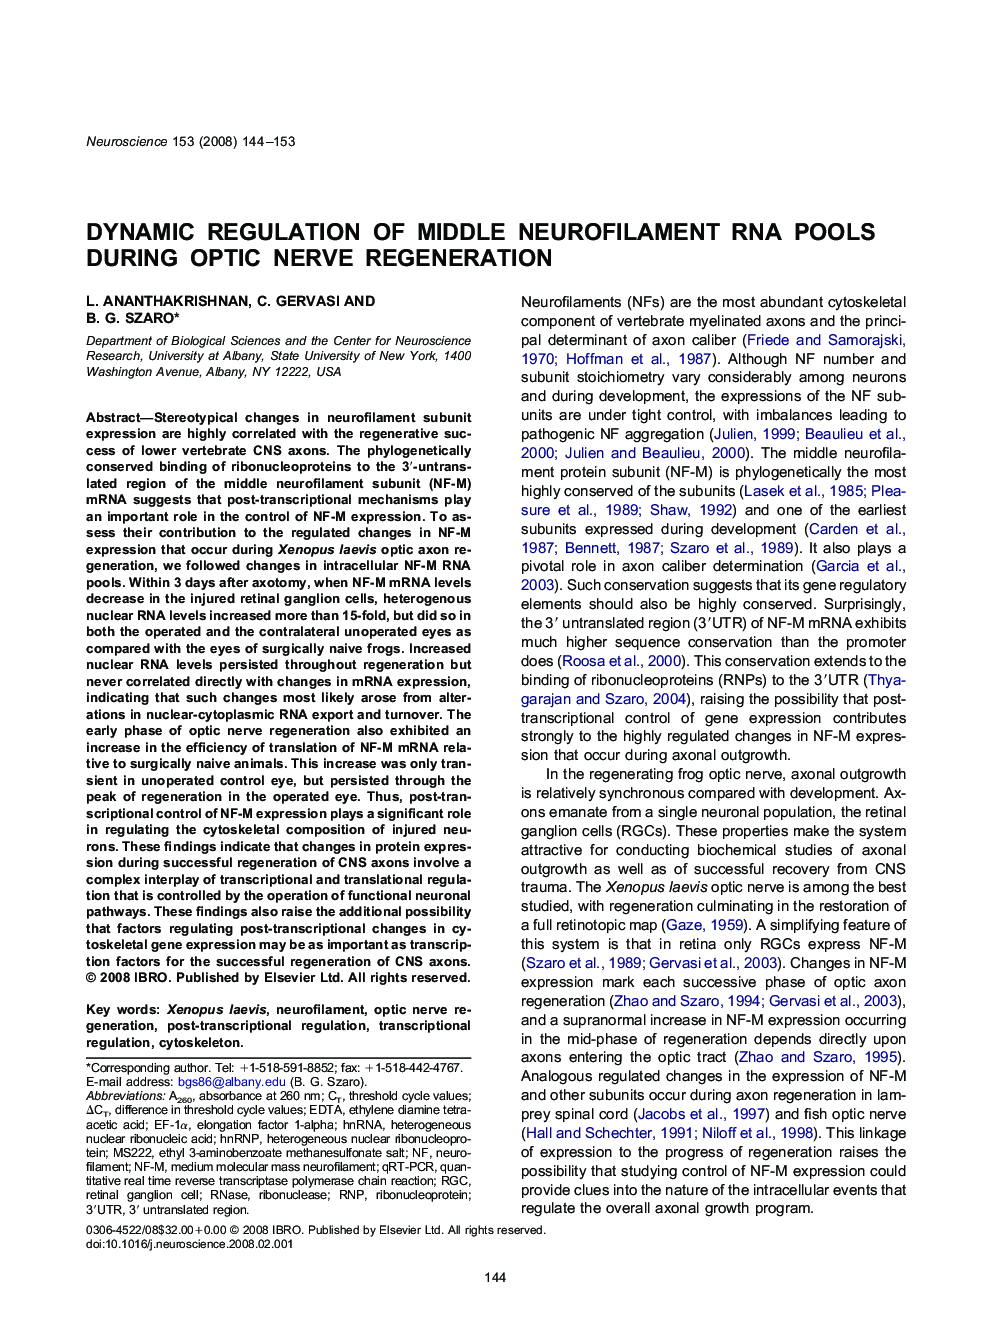 Dynamic regulation of middle neurofilament RNA pools during optic nerve regeneration